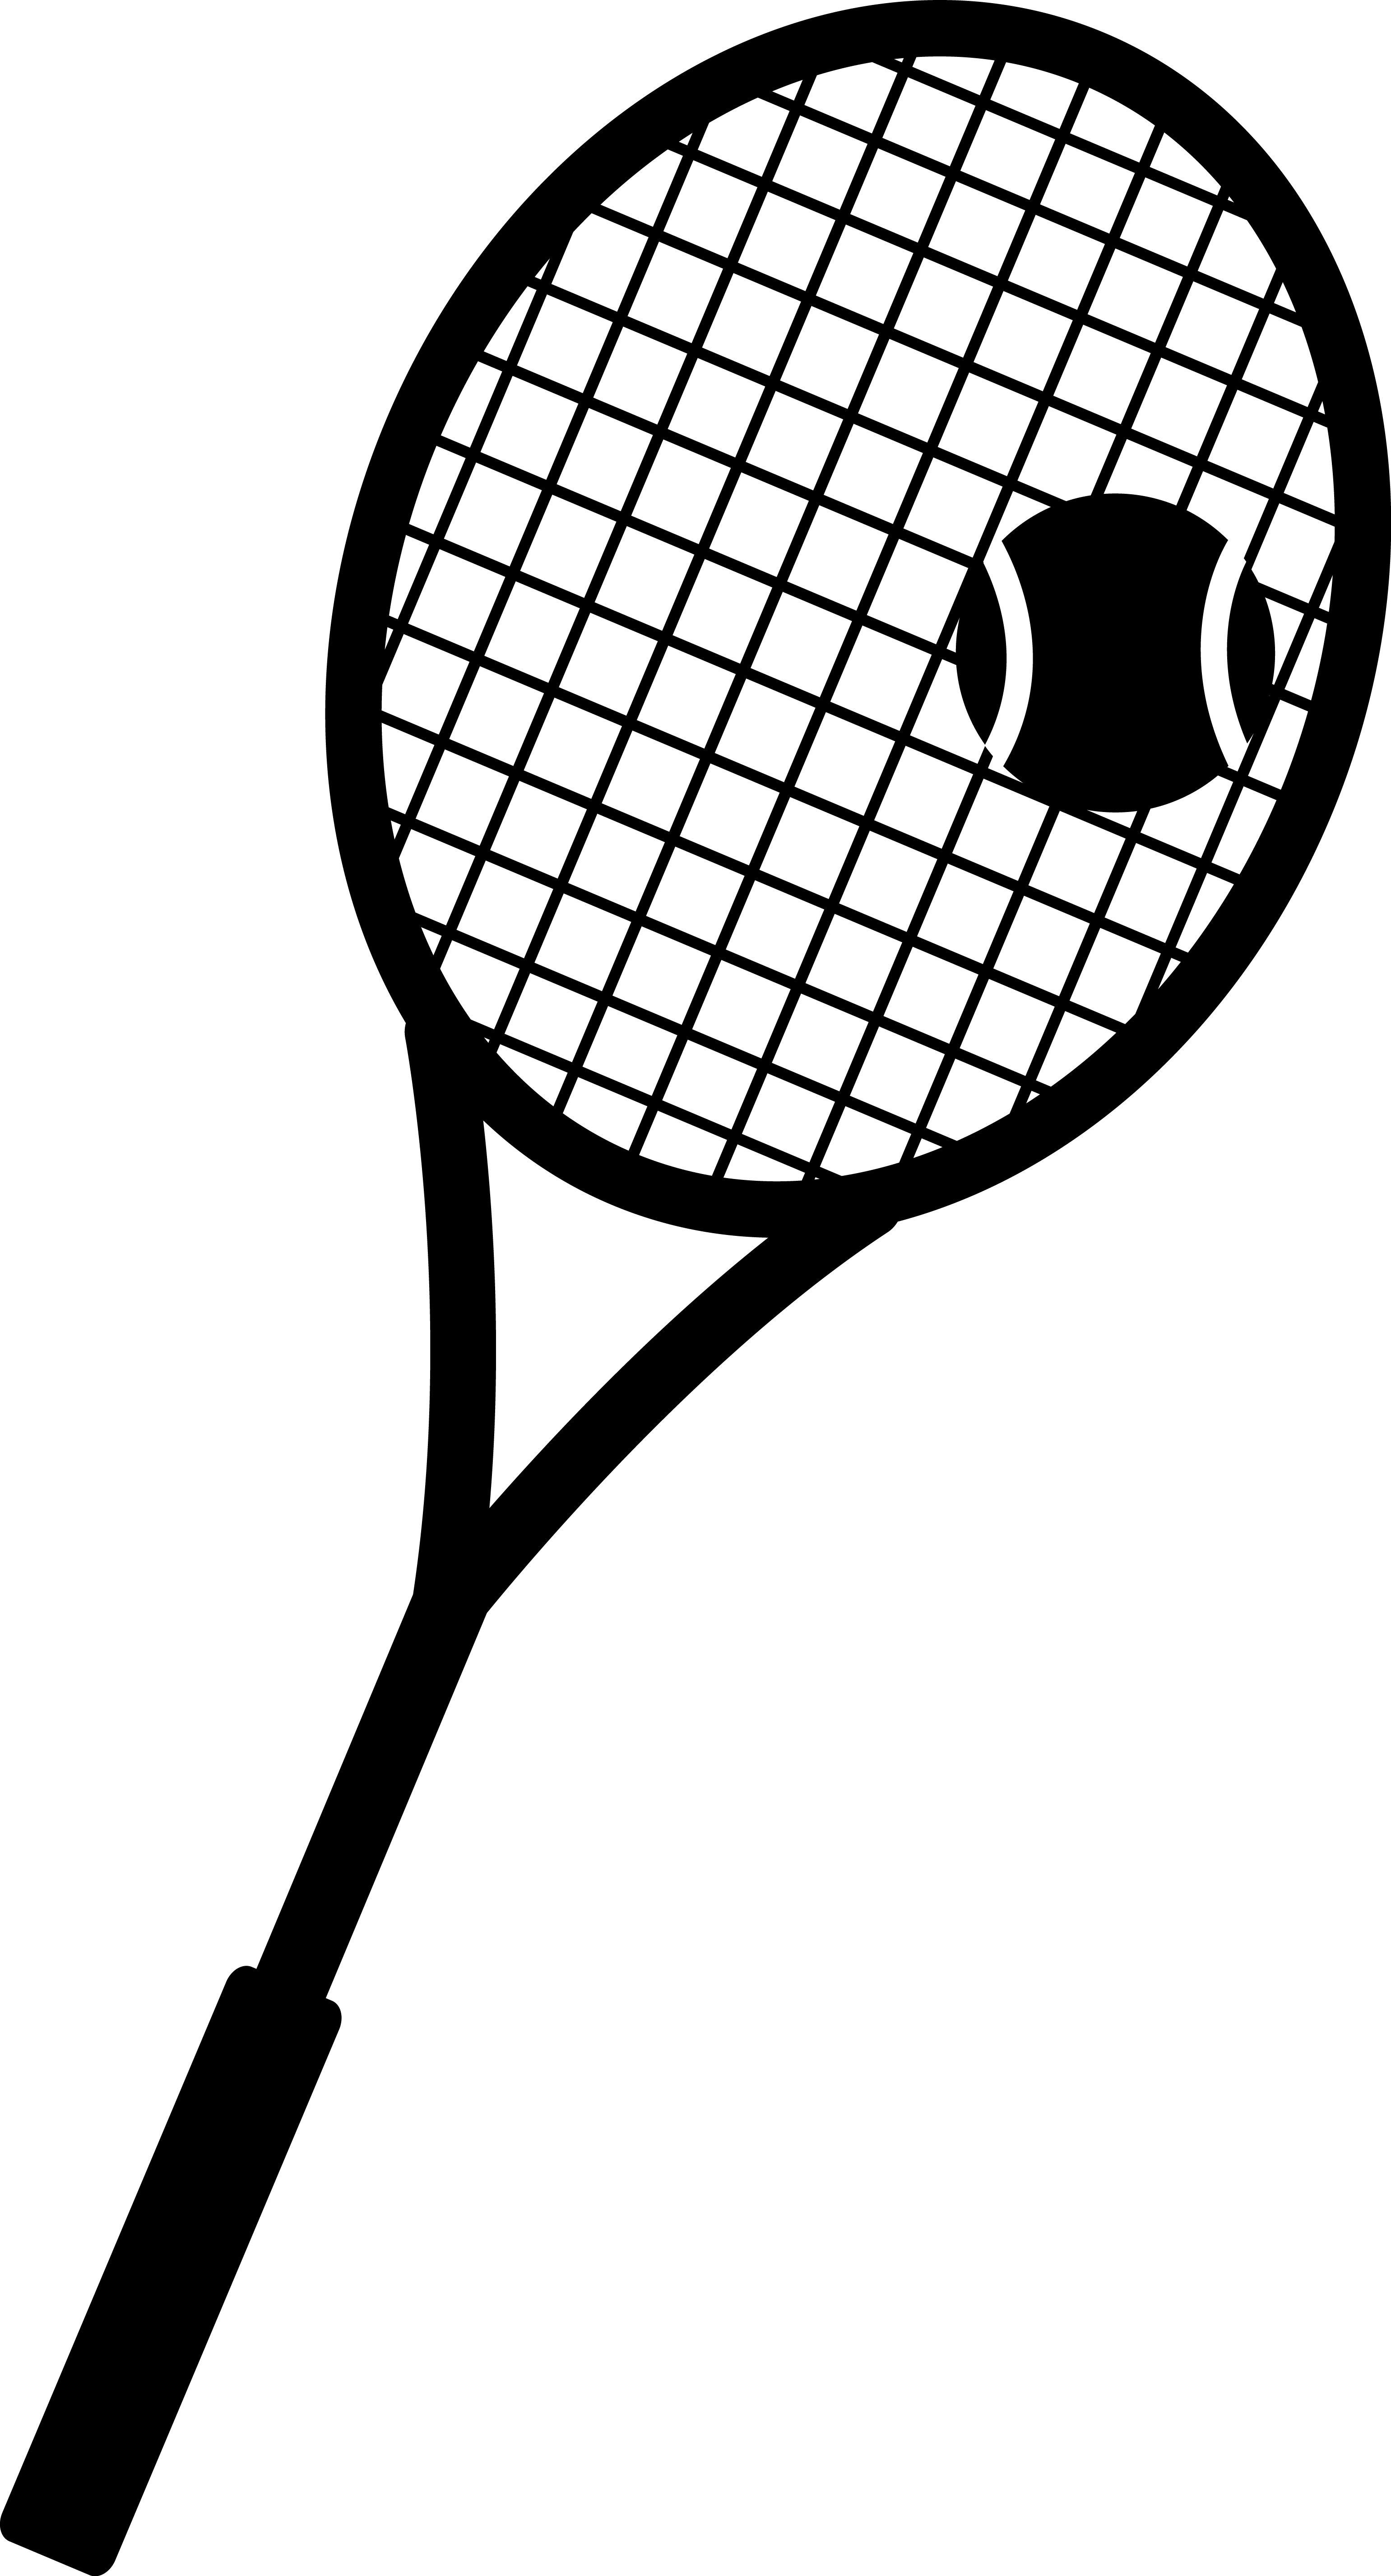 Tennis Racket Logo - Free Tennis Racket Cliparts, Download Free Clip Art, Free Clip Art ...